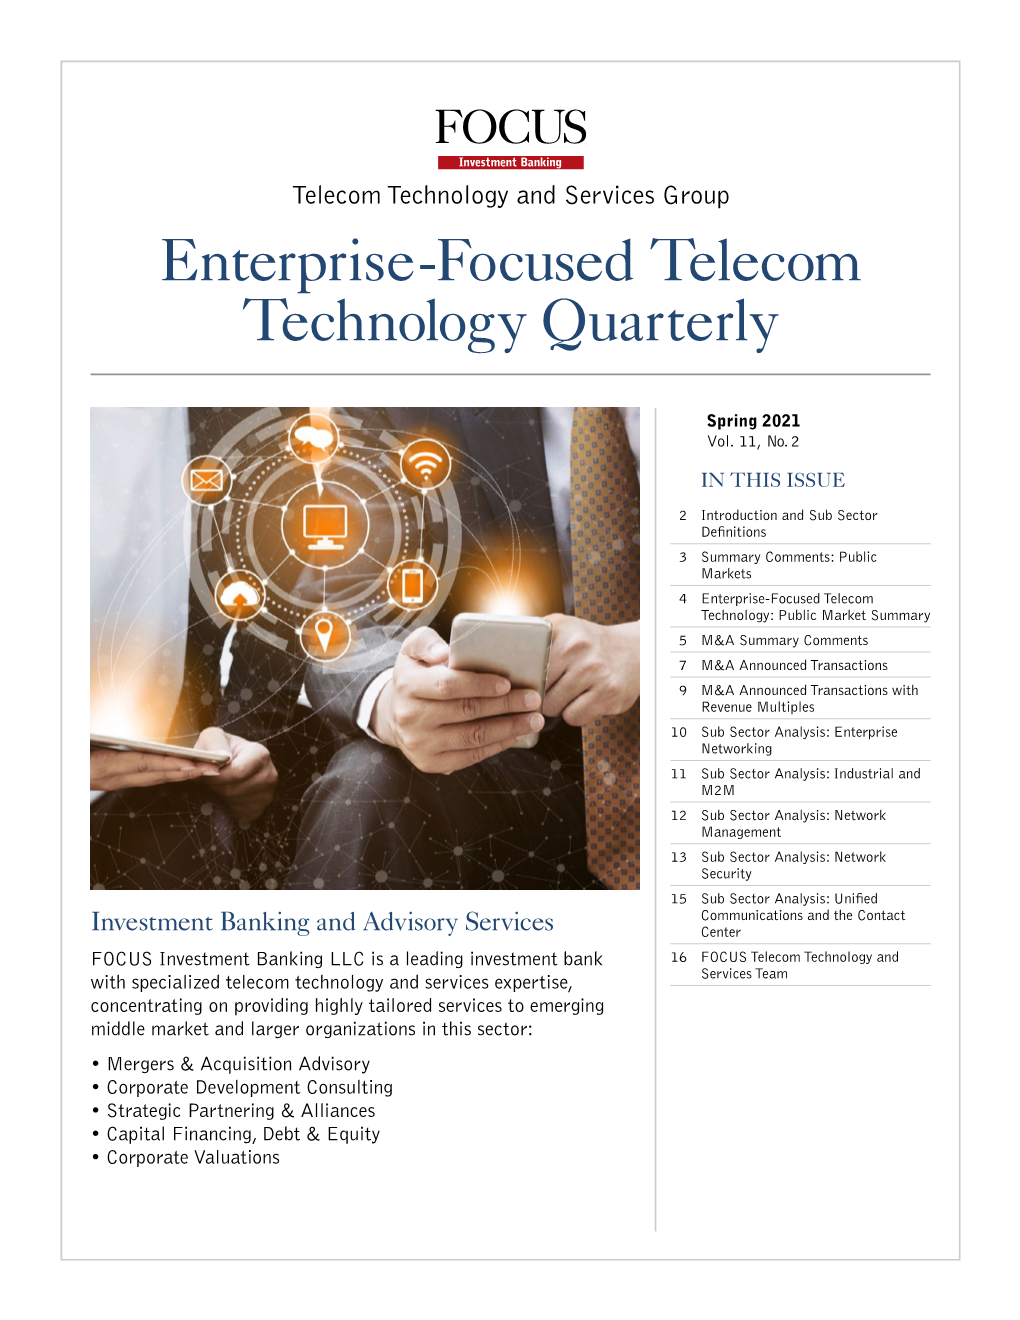 Enterprise-Focused Telecom Technology Quarterly